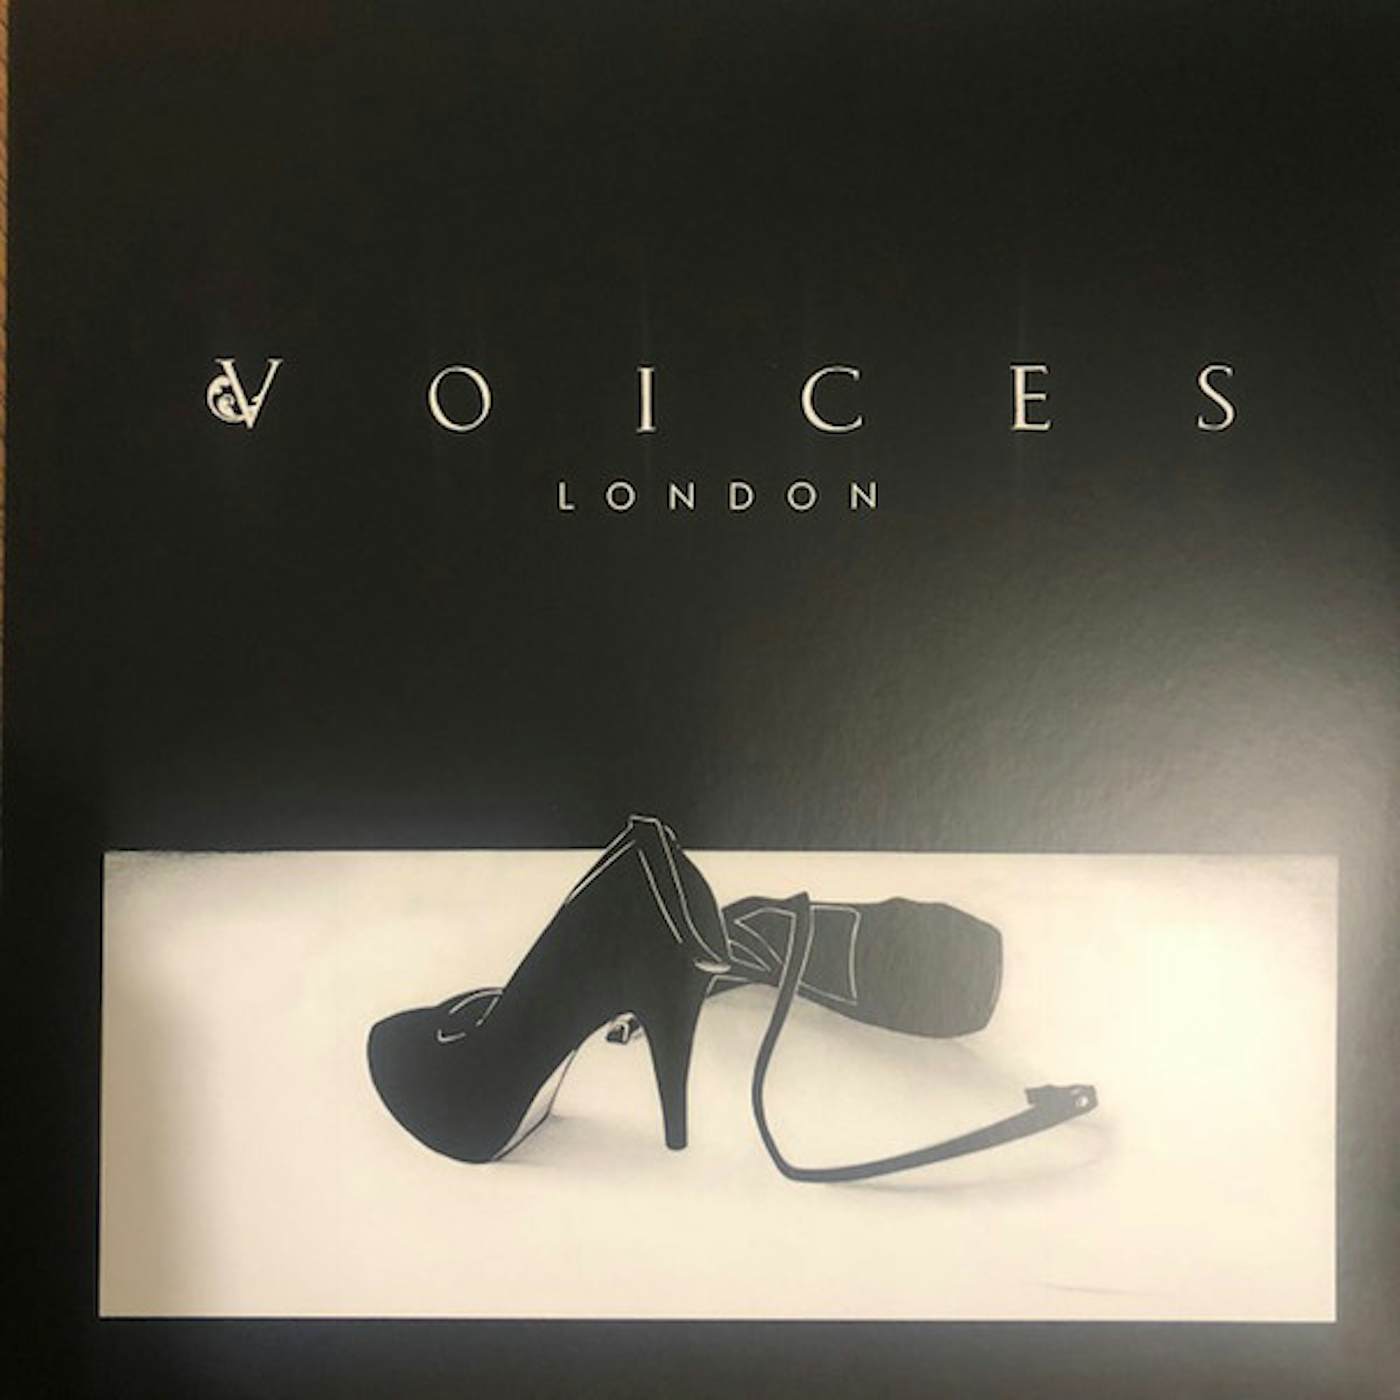 The Voices LONDON Vinyl Record